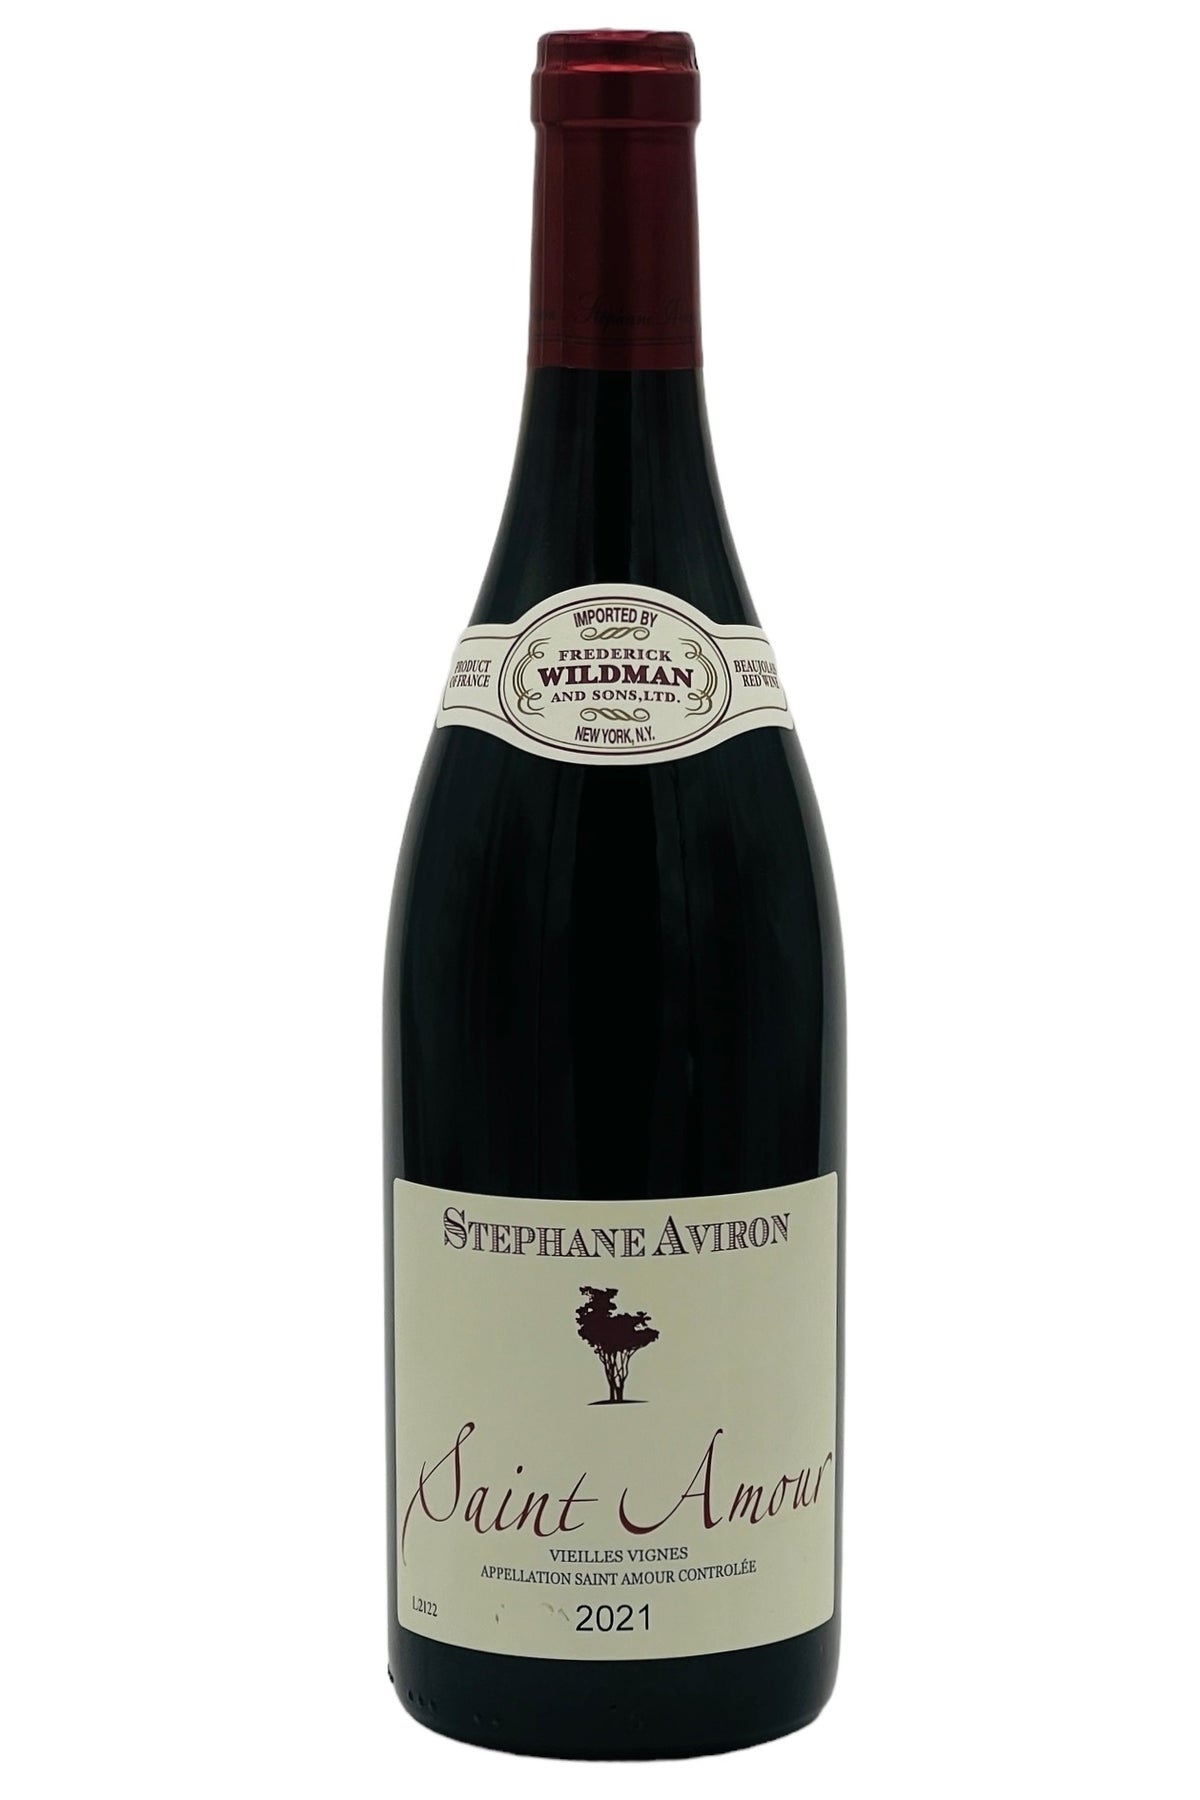 Stephane Aviron 2021 Saint Amour Vieilles Vignes Beaujolais